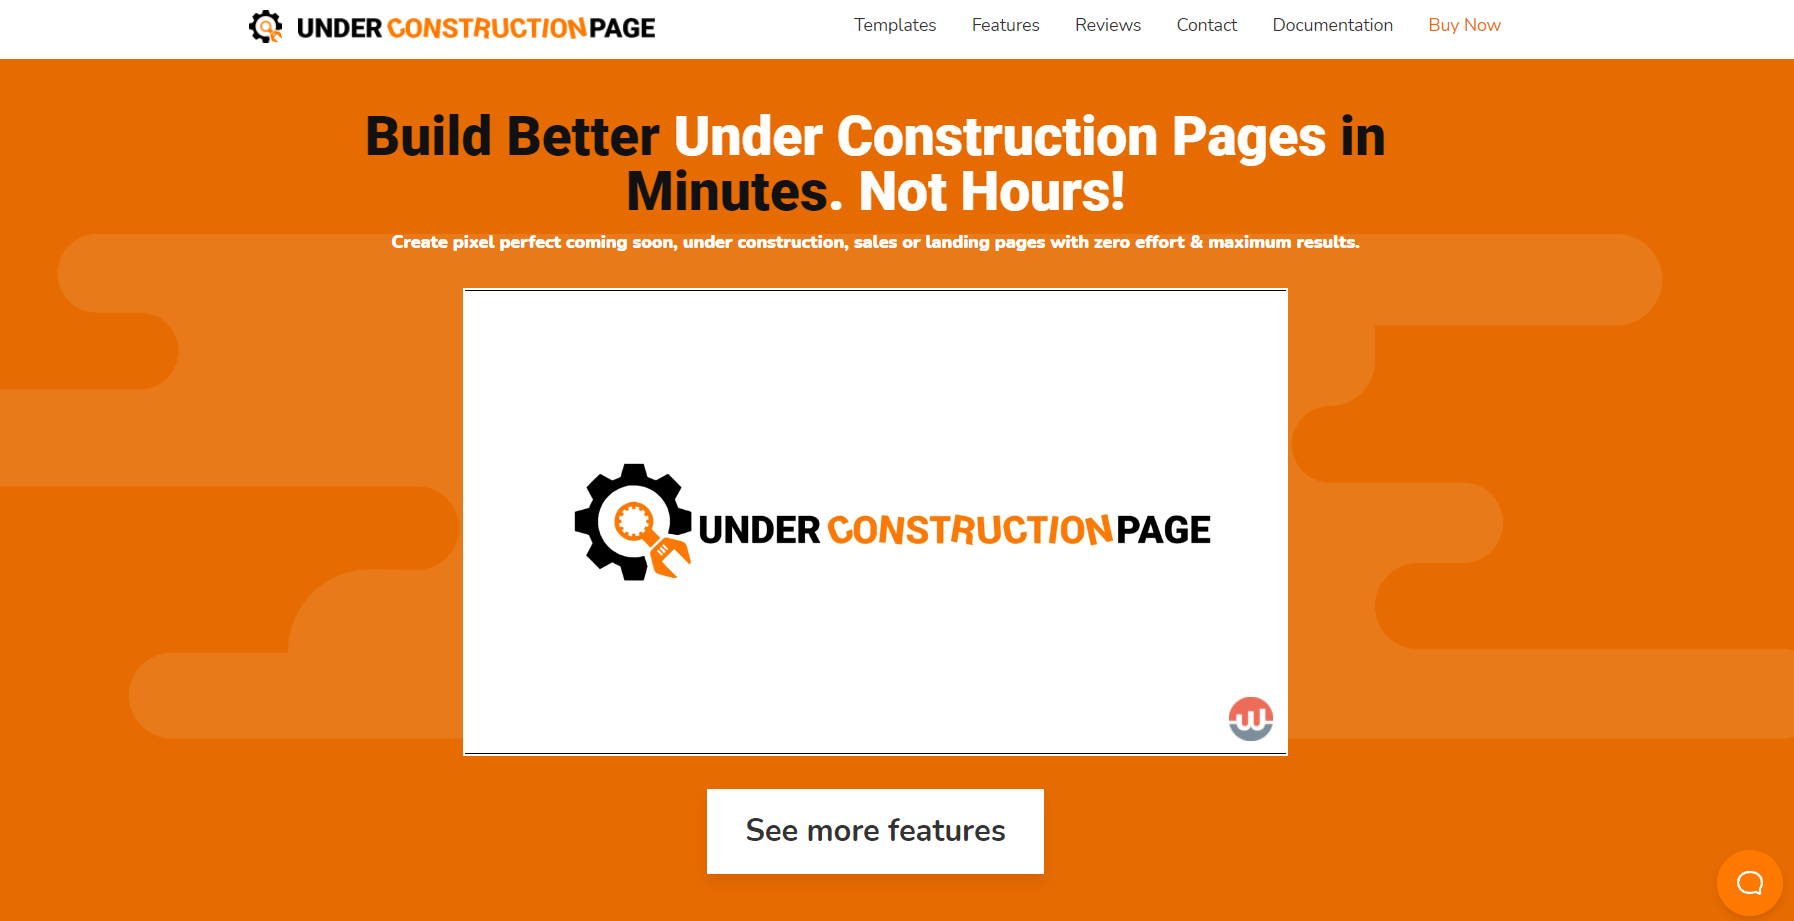 UnderConstructionPage